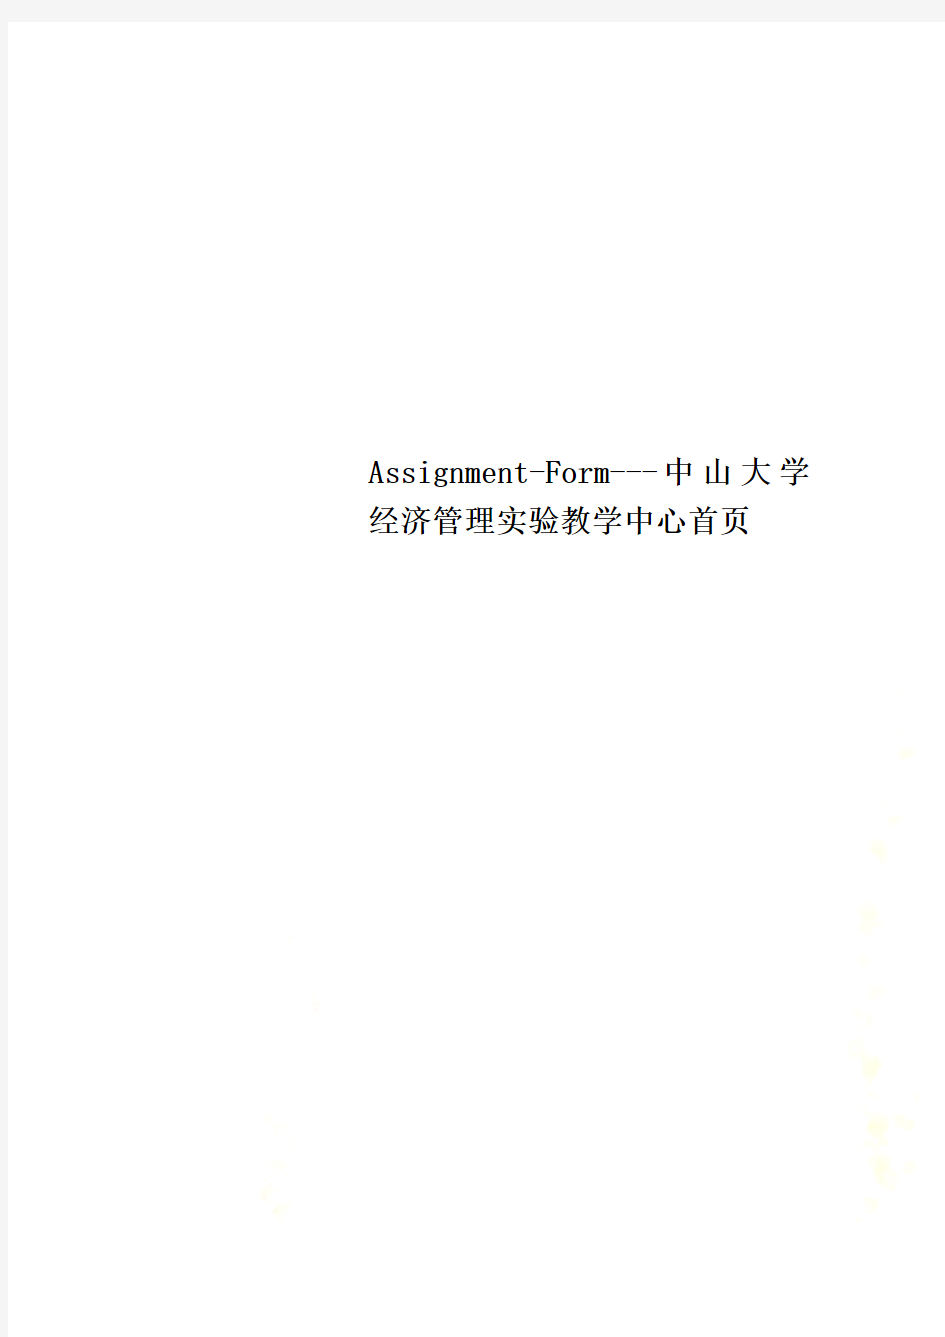 Assignment-Form---中山大学经济管理实验教学中心首页